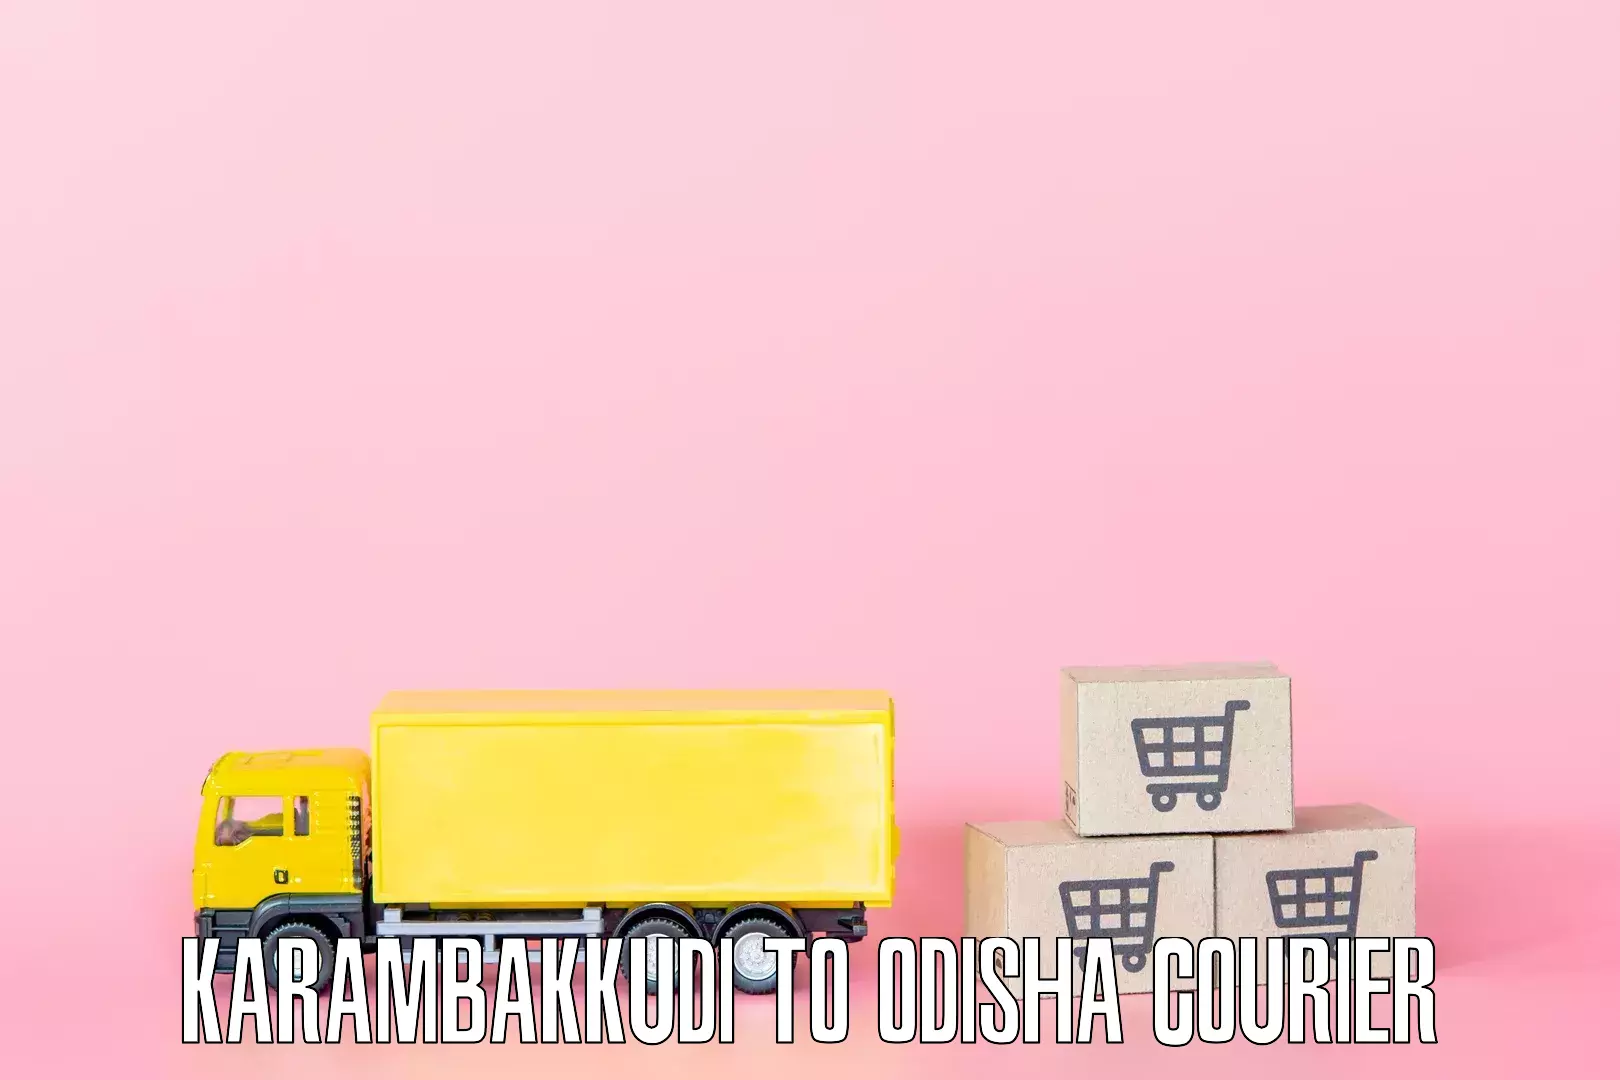 Full-service movers Karambakkudi to Odisha